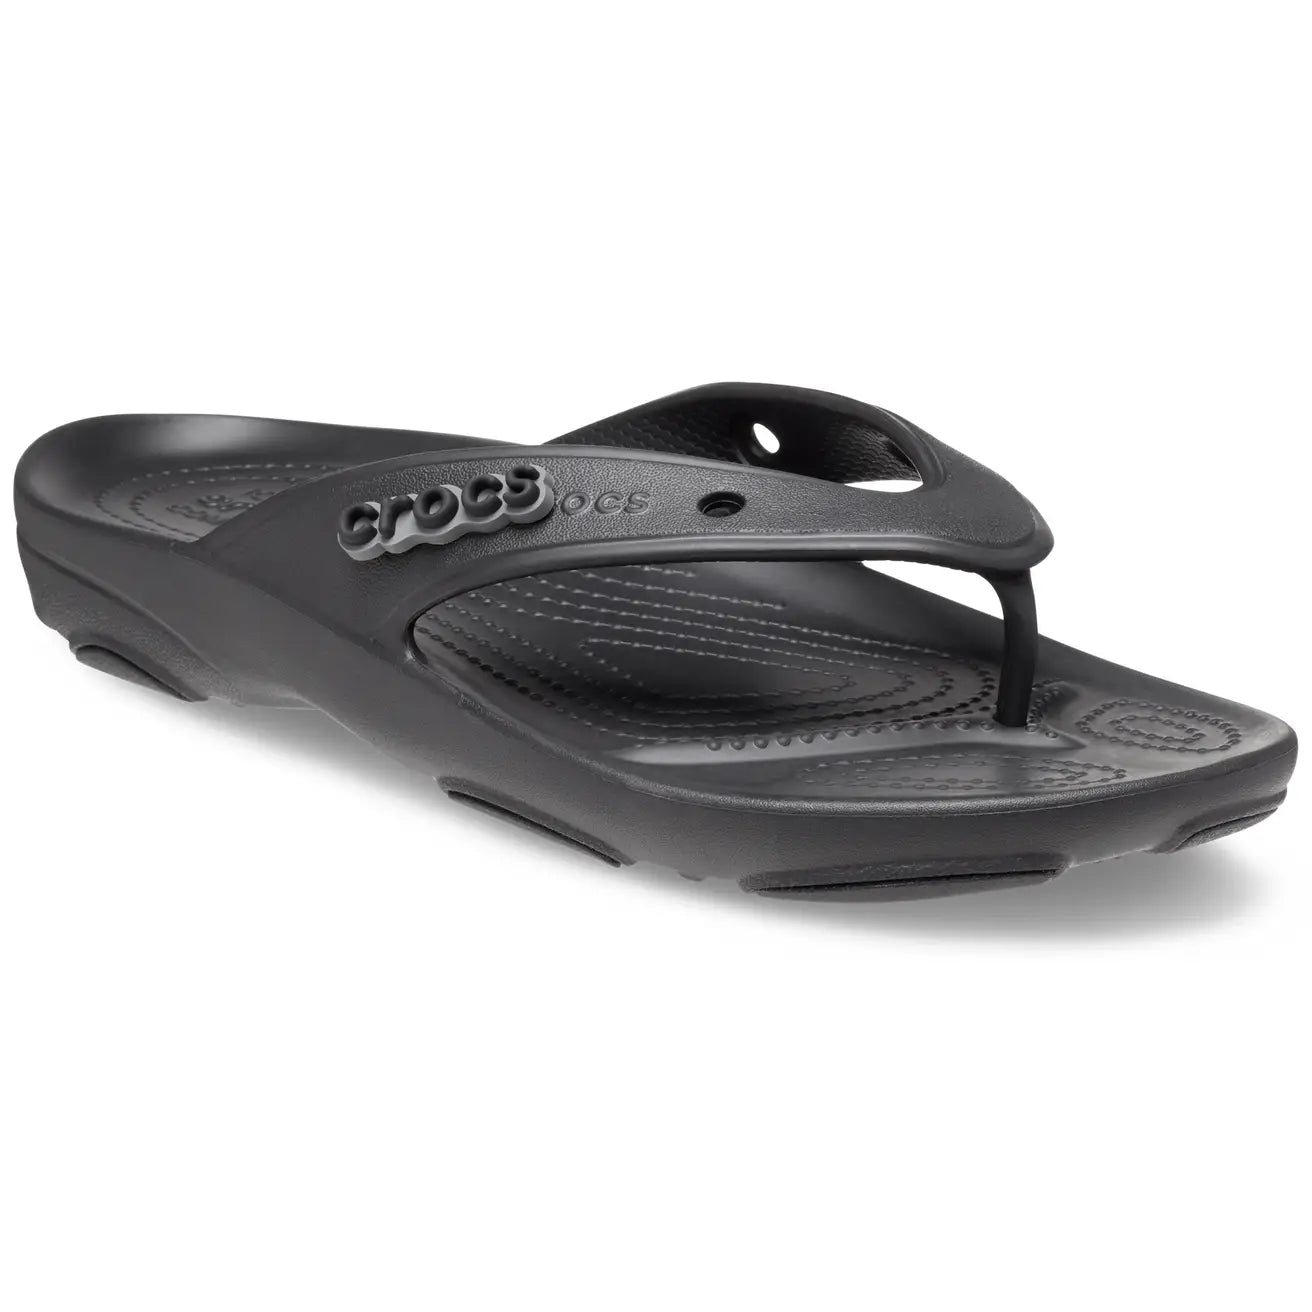 Classic All Terrain Flip - shoe&me - Crocs - Jandal - Crocs, Jandals, Summer, Unisex